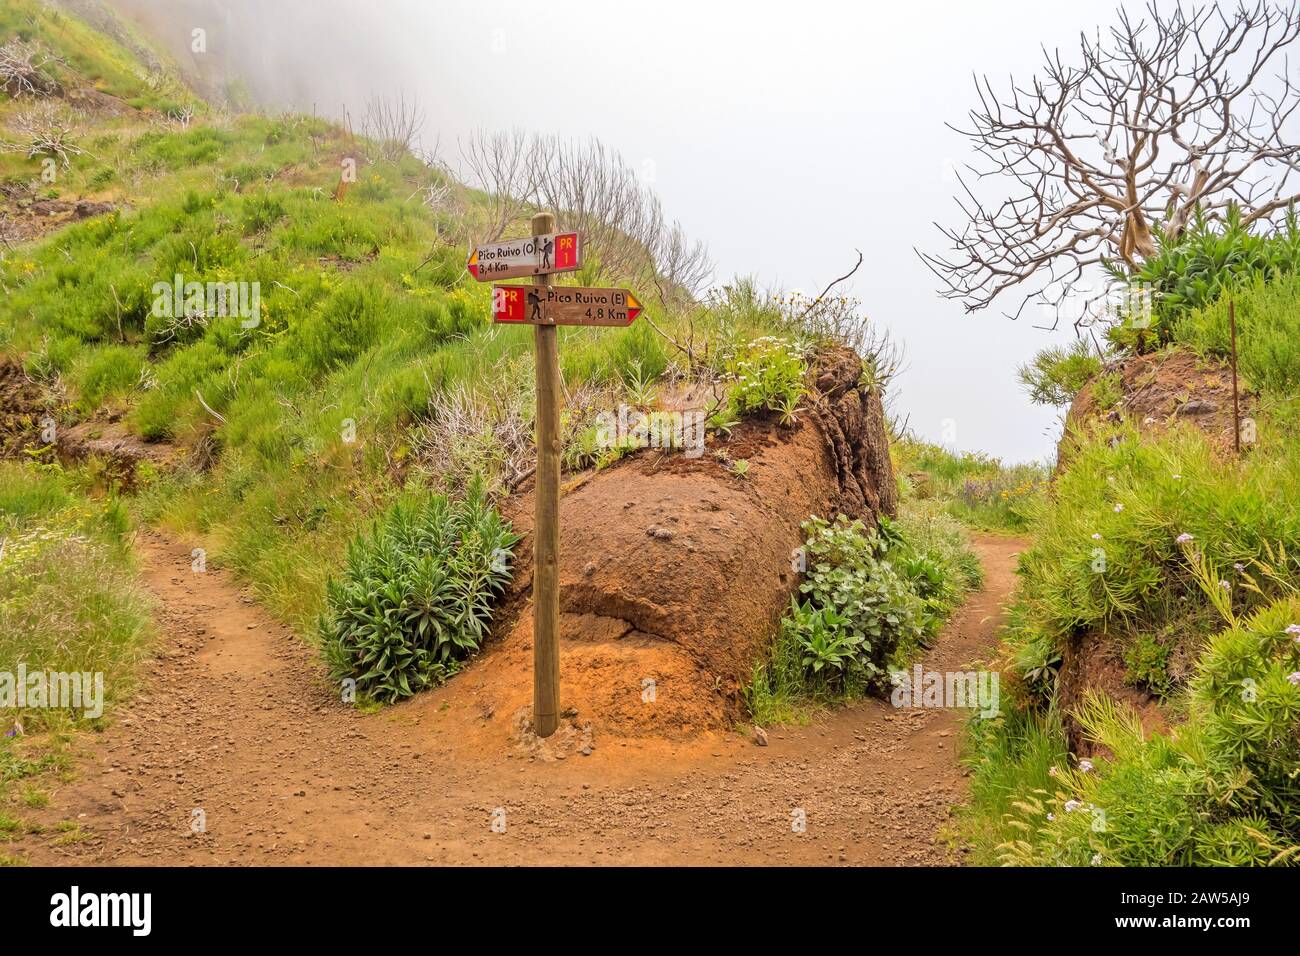 Wanderweg-Passage vom Berg Pico Arieiro nach Pico Ruivo, Madeira - Wegweiser mit Alternativen Routen Stockfoto